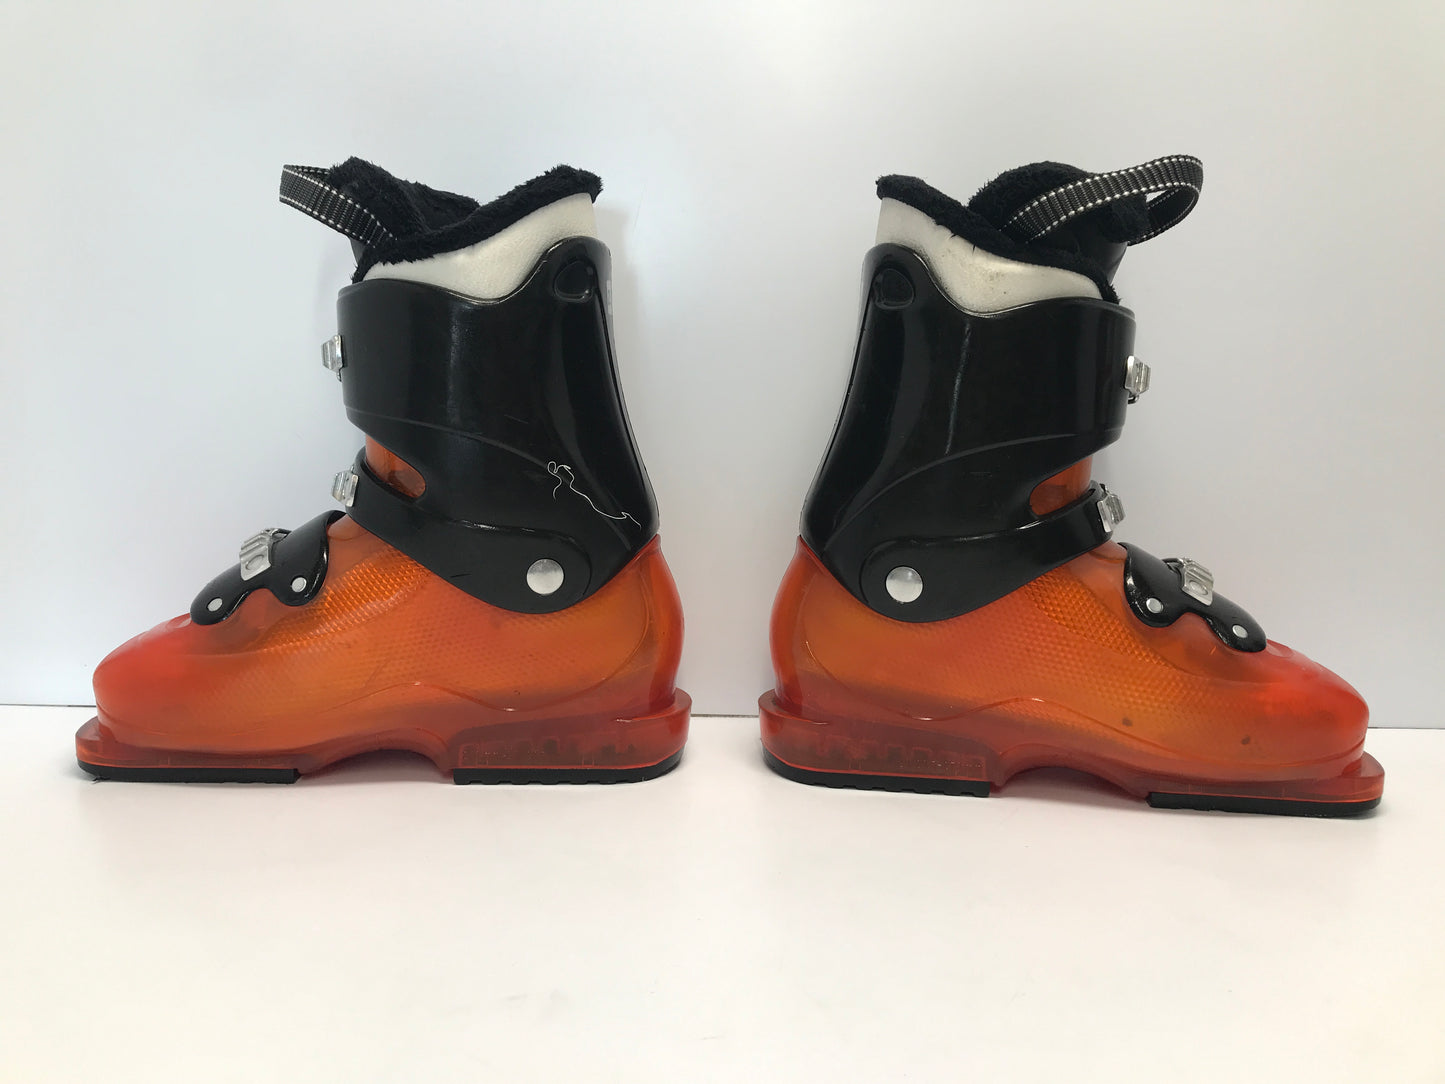 Ski Boots Mondo Size 23.5 Men's Size 5.5 Ladies size 6.5 276 mm Salomon Tangerine Black Like New